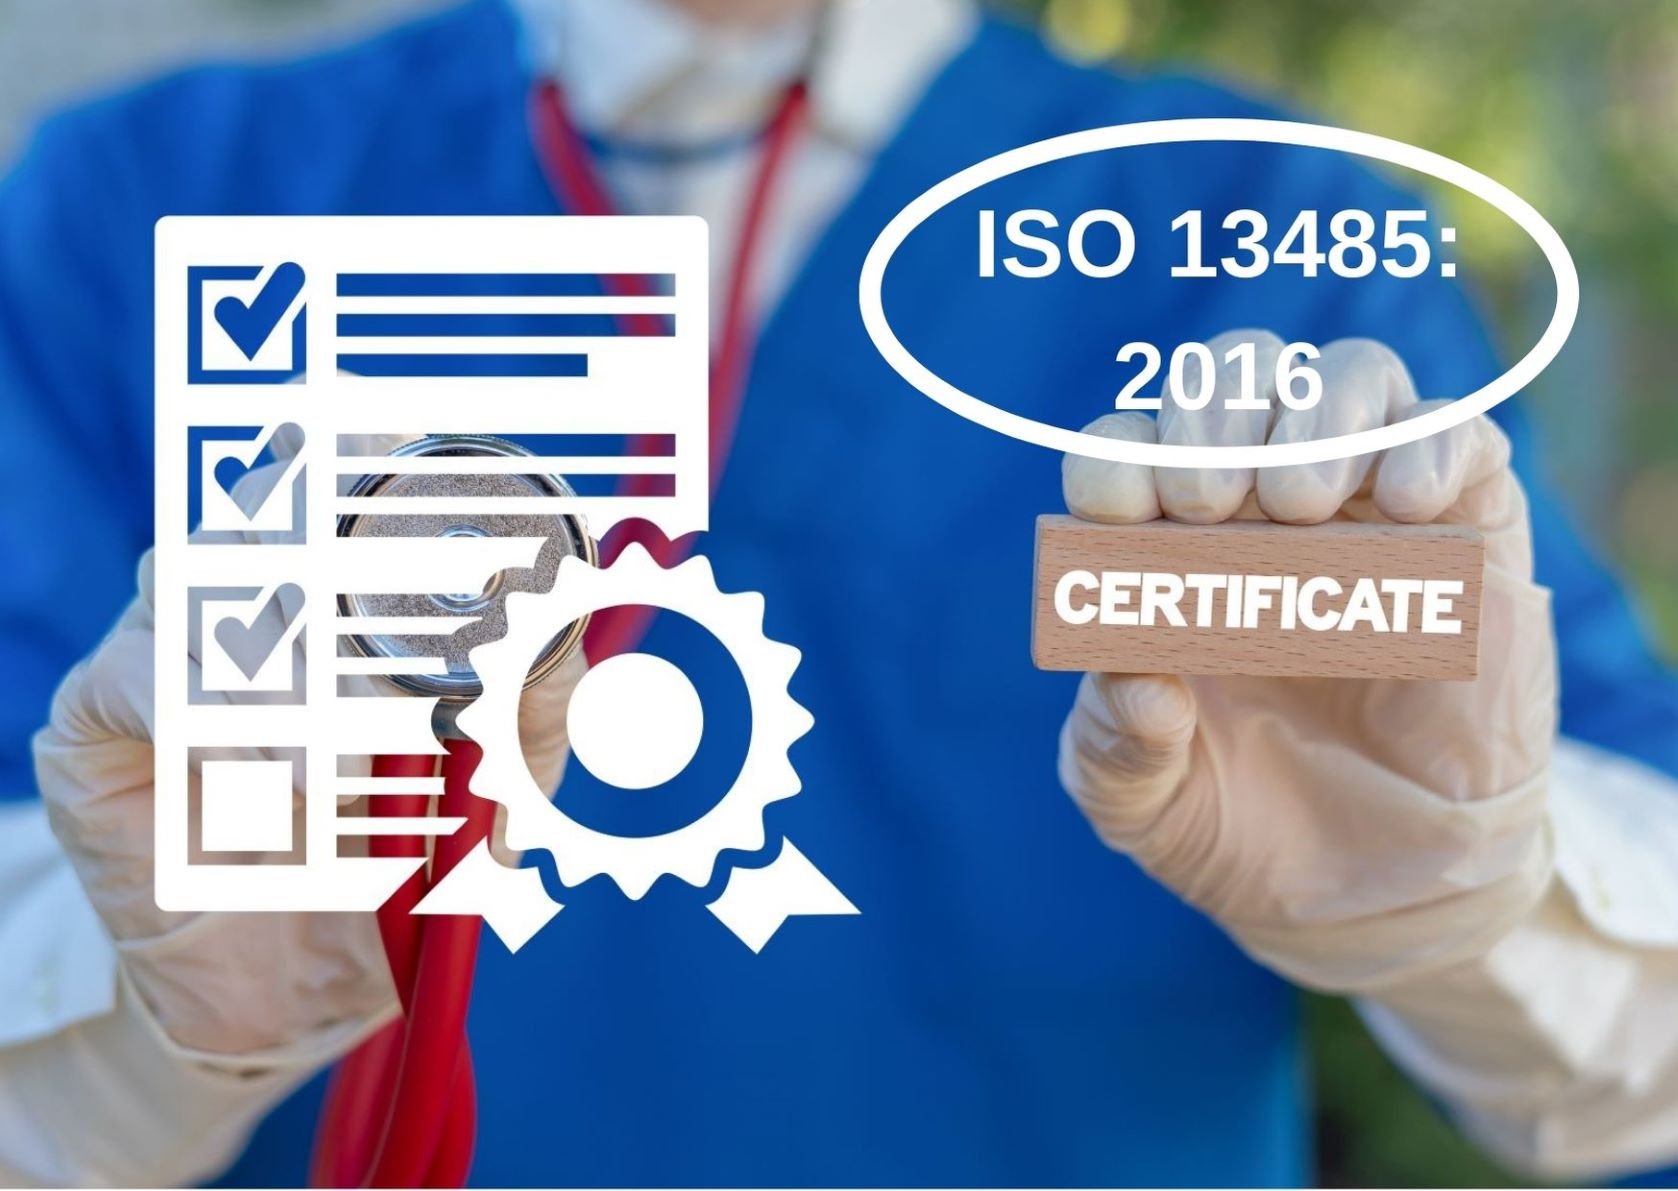 ISO 13485 certificate medium size 